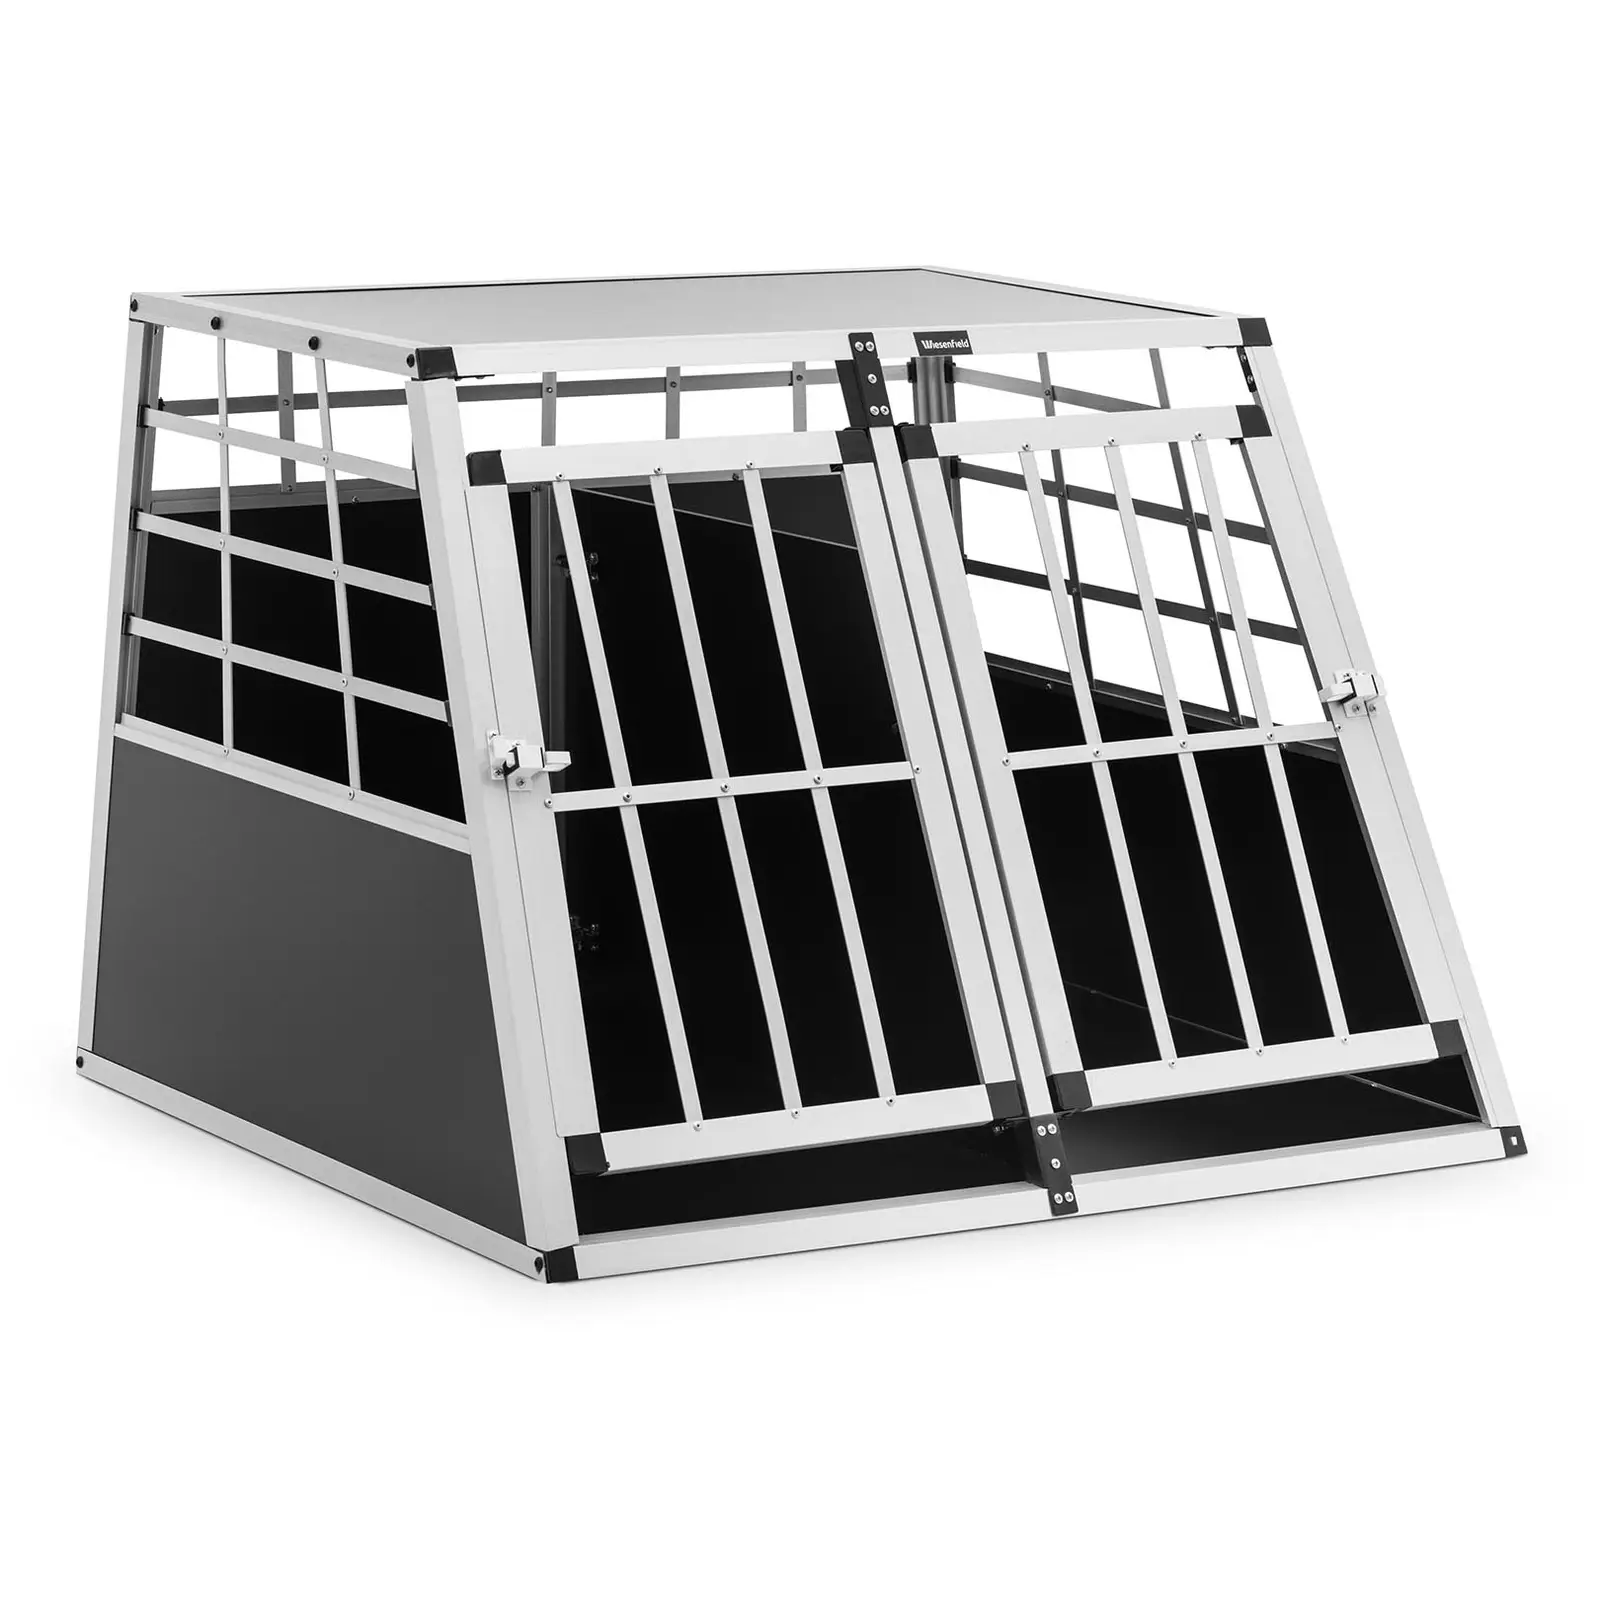 Hundebur - aluminium - trapezformet - 95 x 85 x 70 cm - med skillevæg